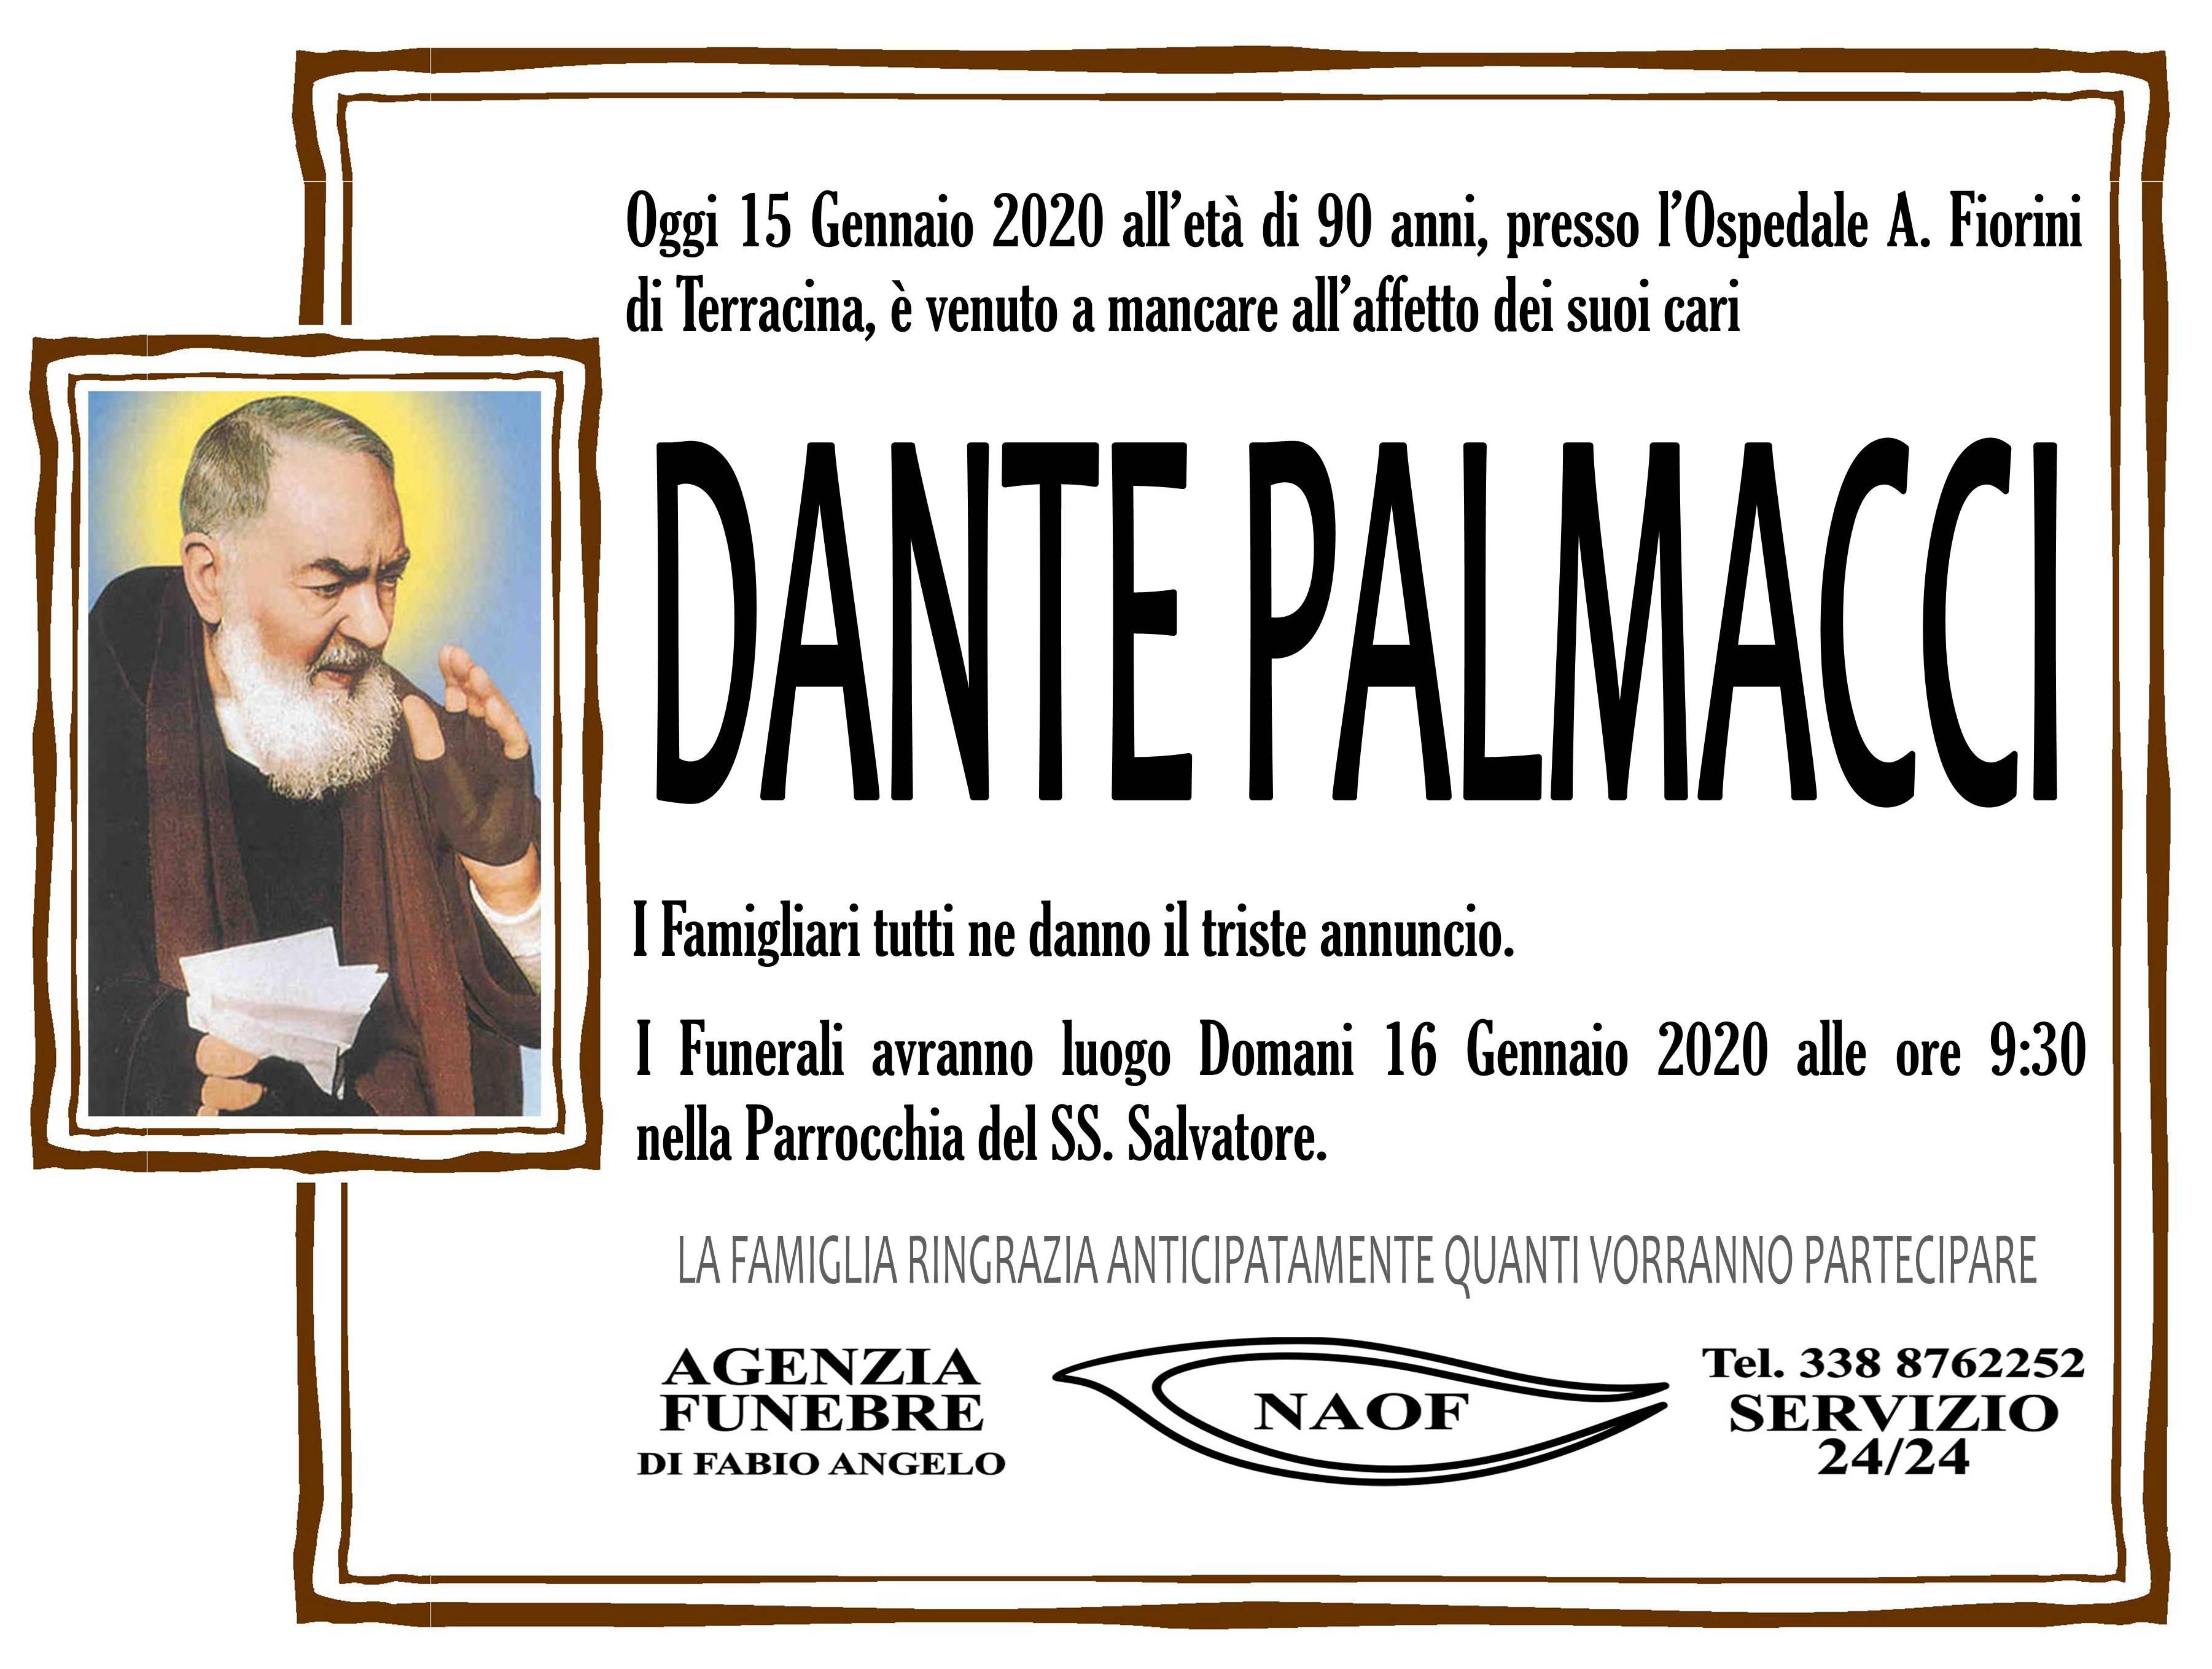 Dante Palmacci